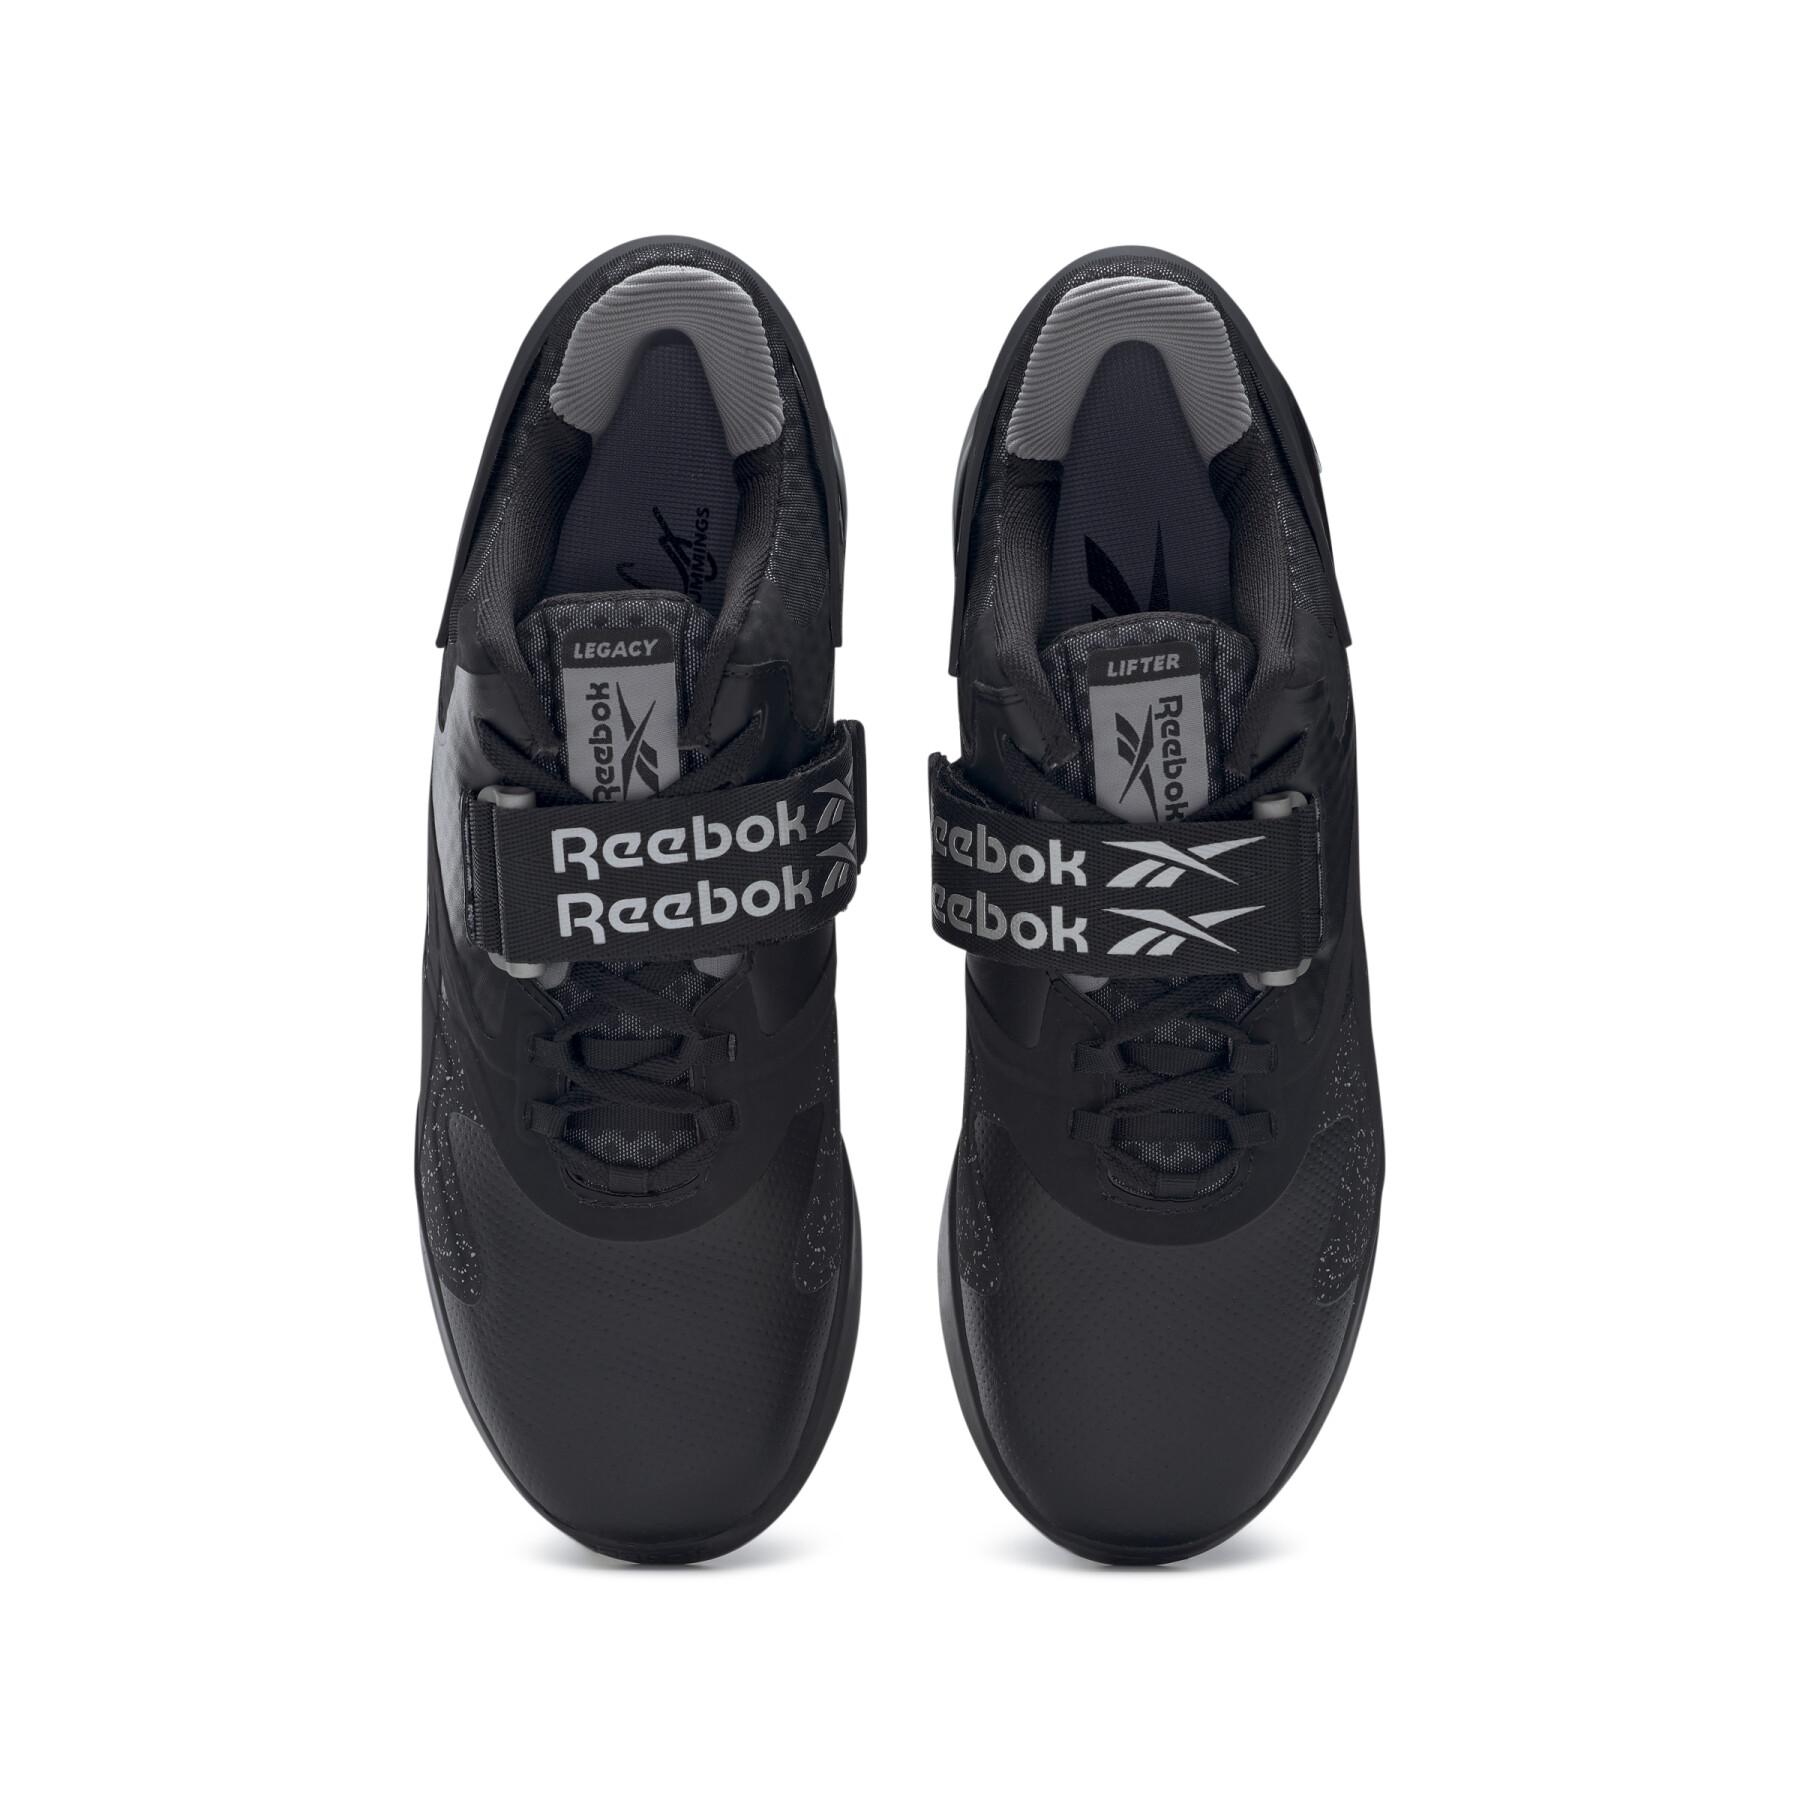 Athletic shoes Reebok Legacy Lifter II